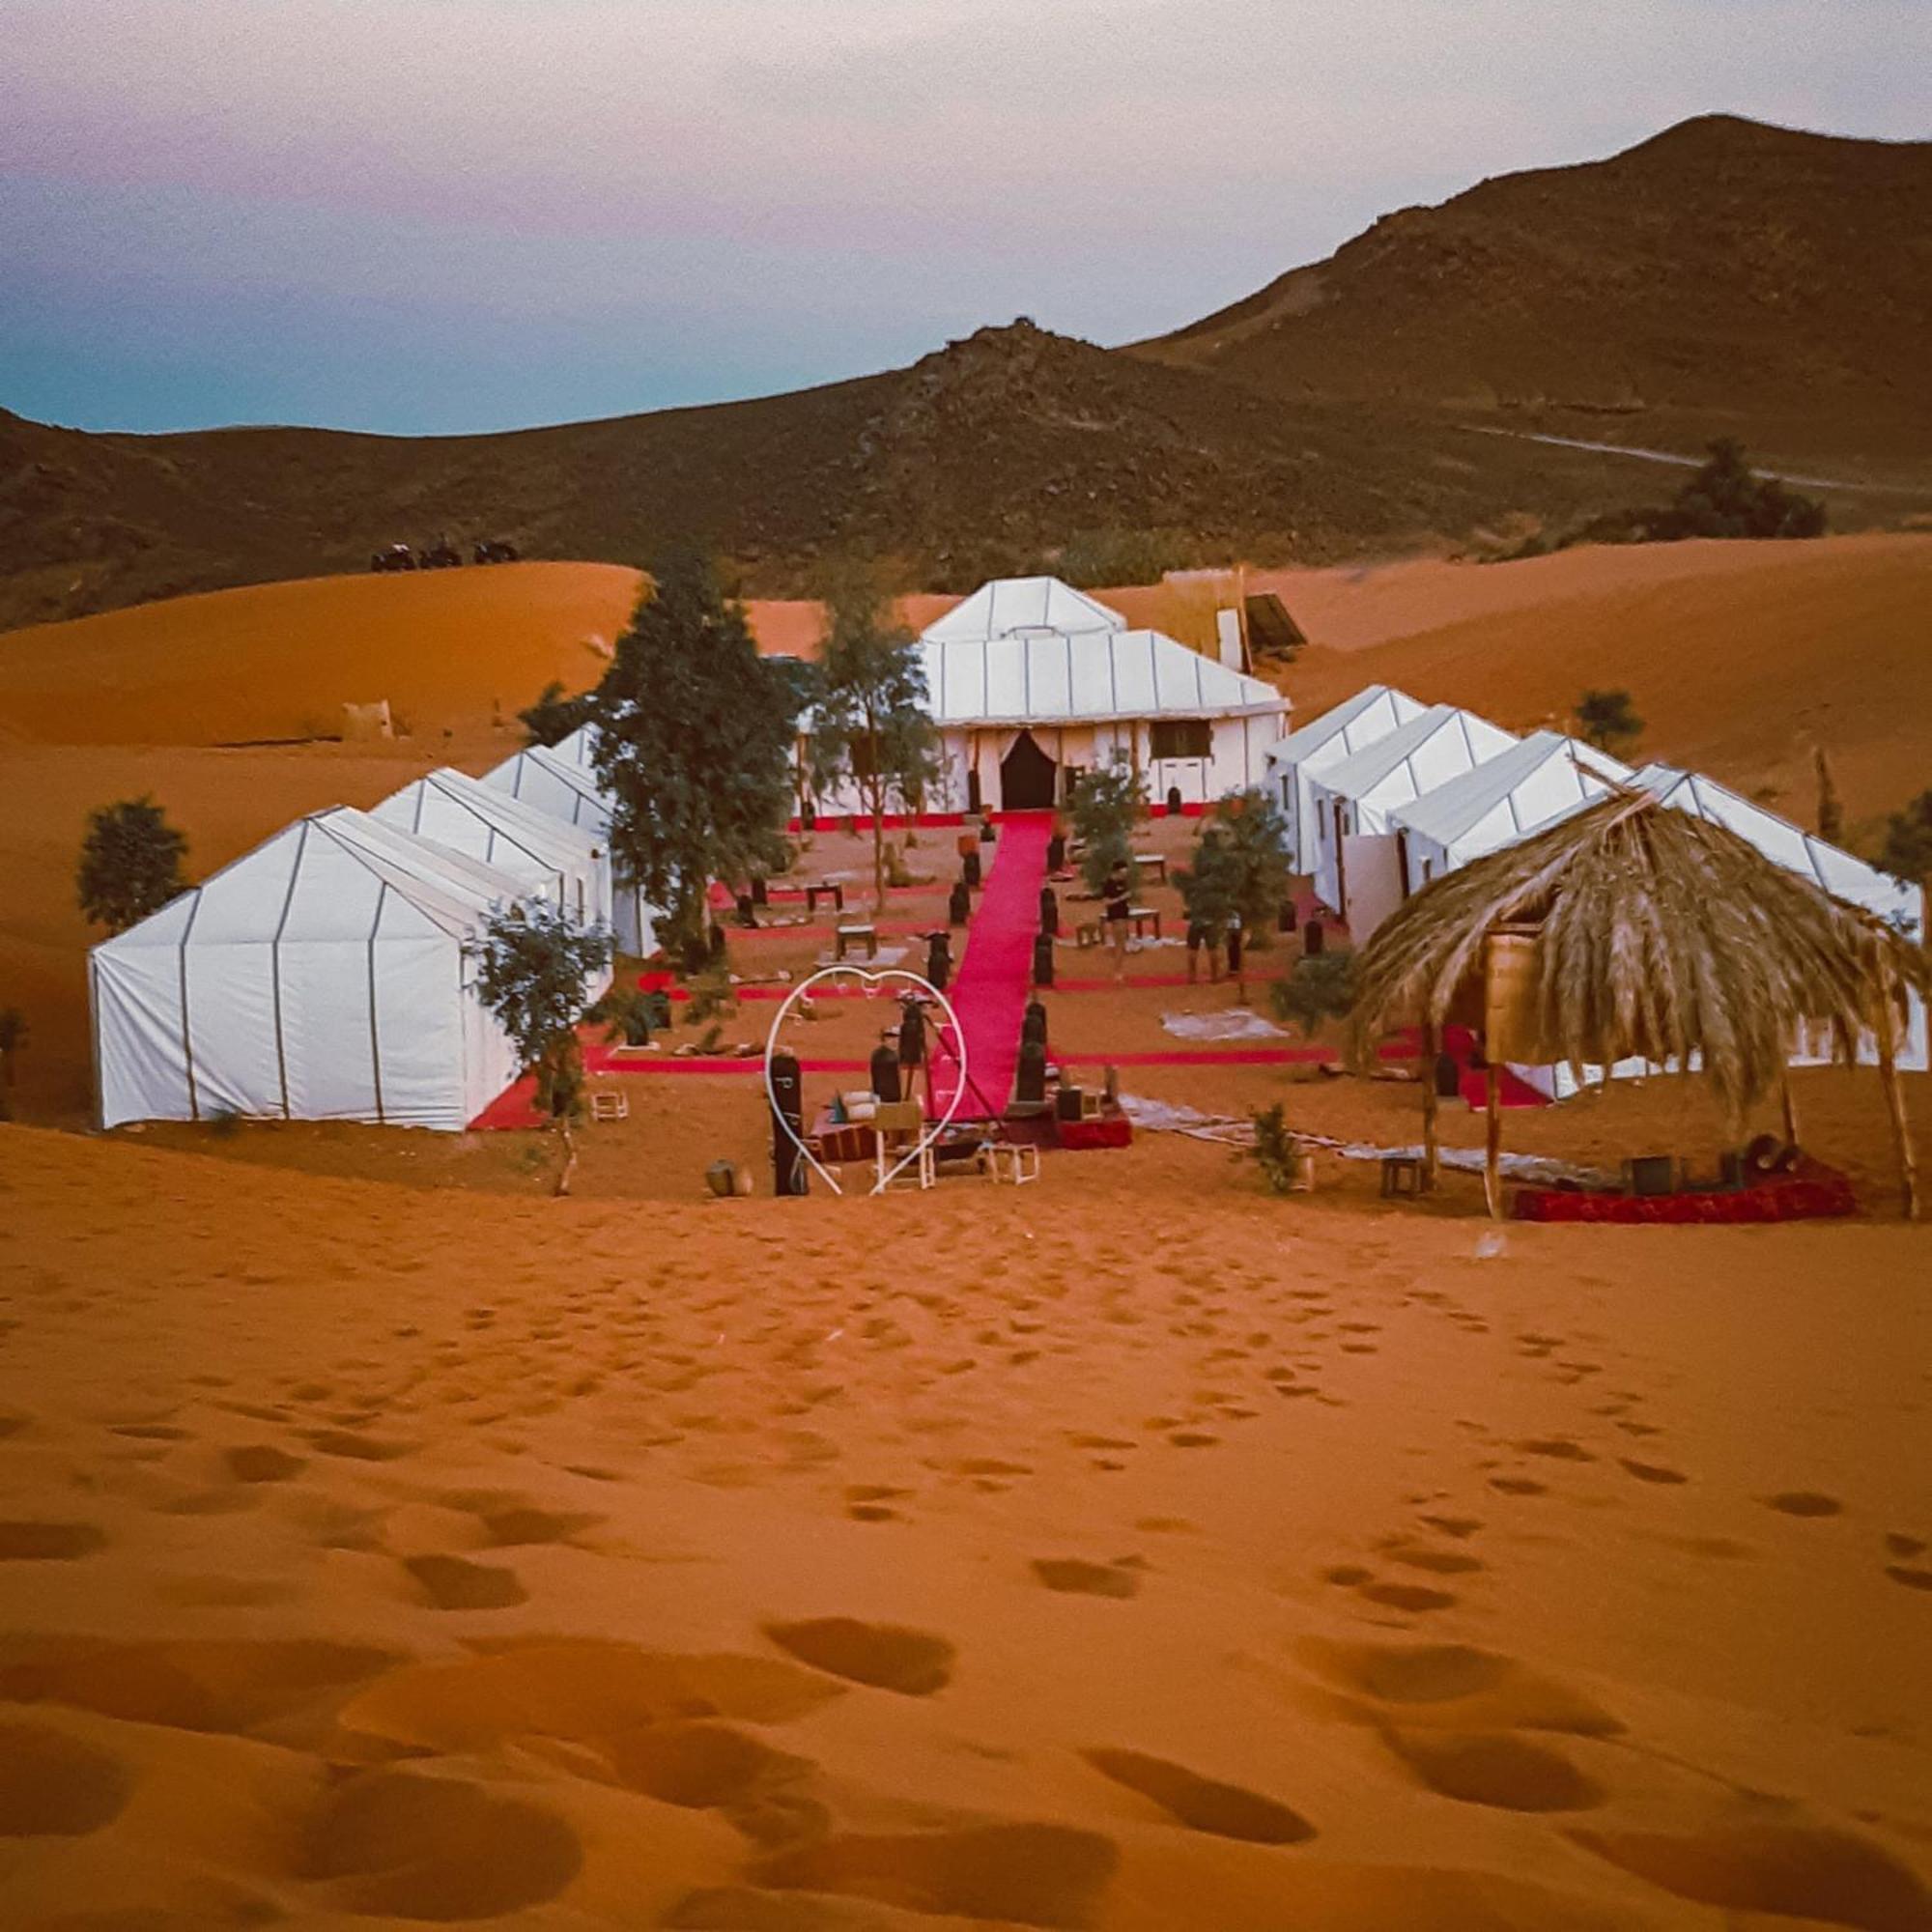 Zahra Luxury Desert Camp 梅尔祖卡 外观 照片